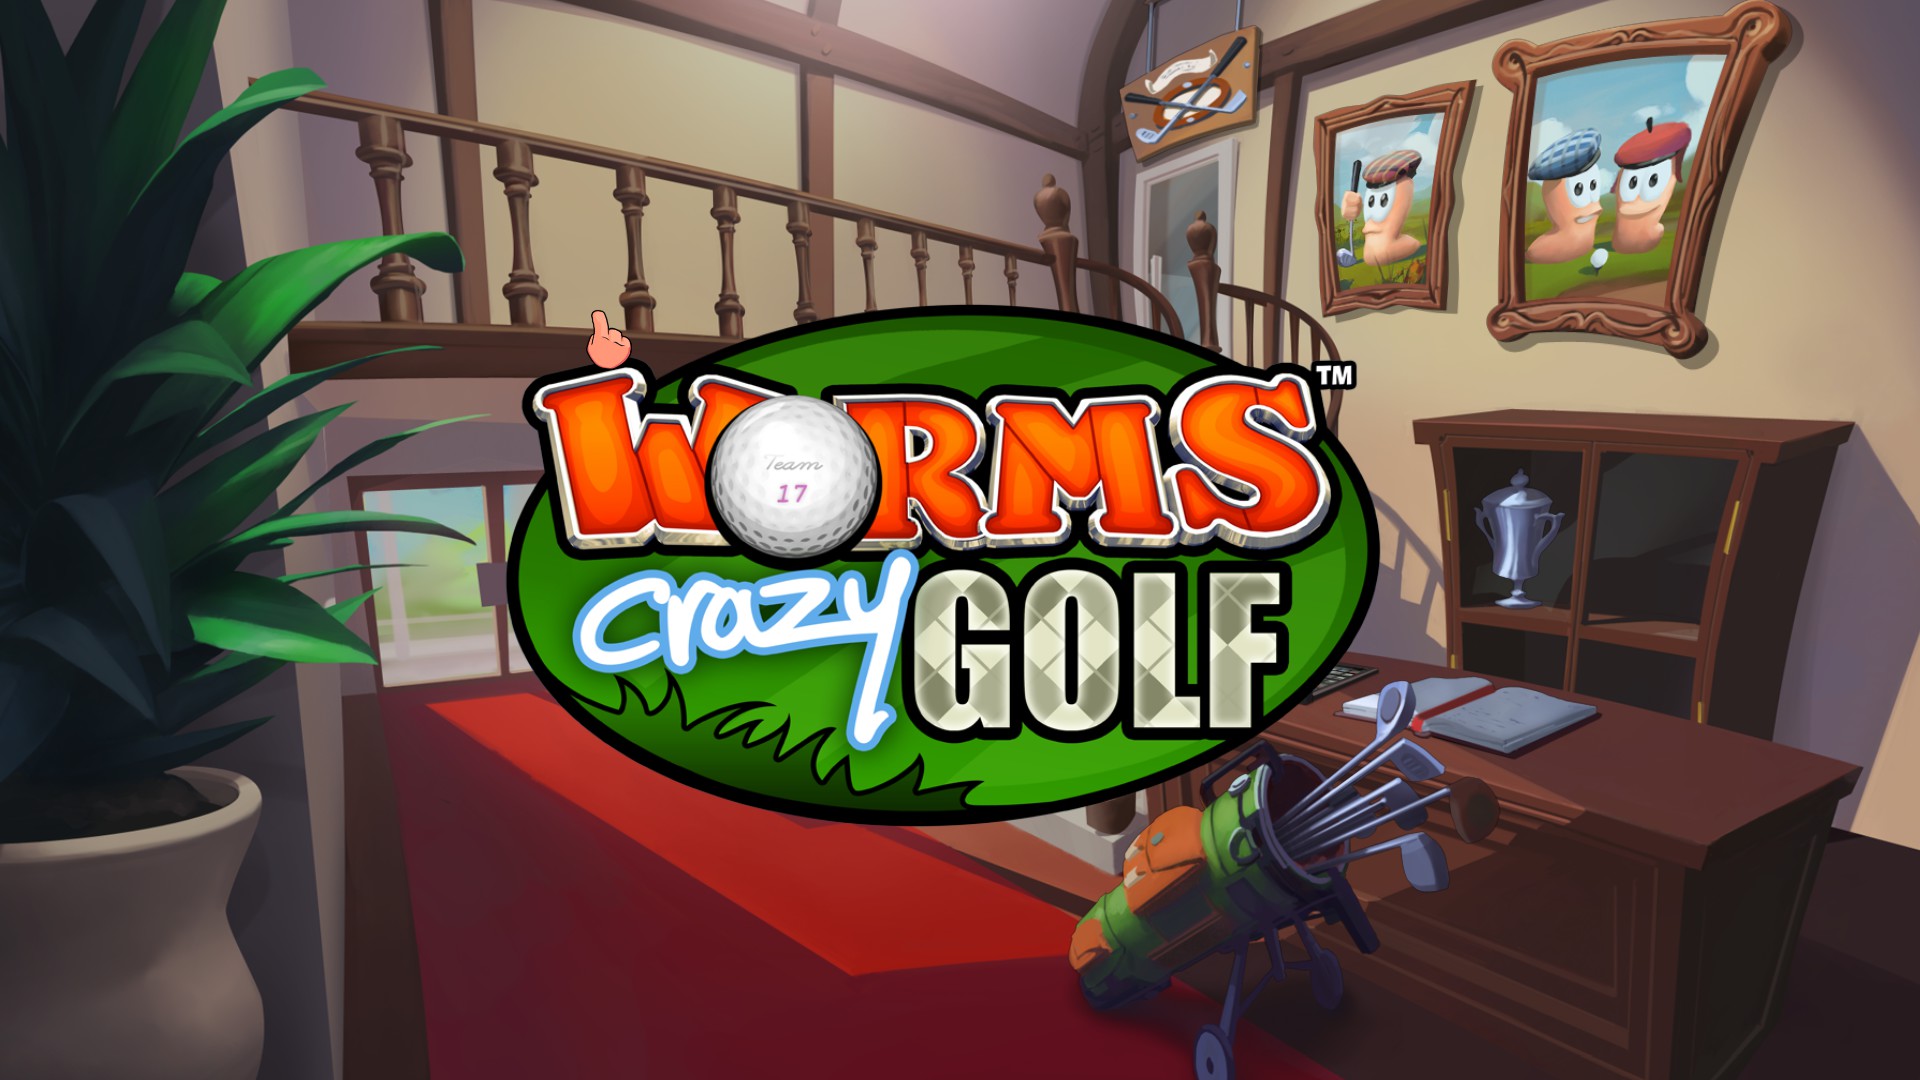 where to delete local file worms crazy golf